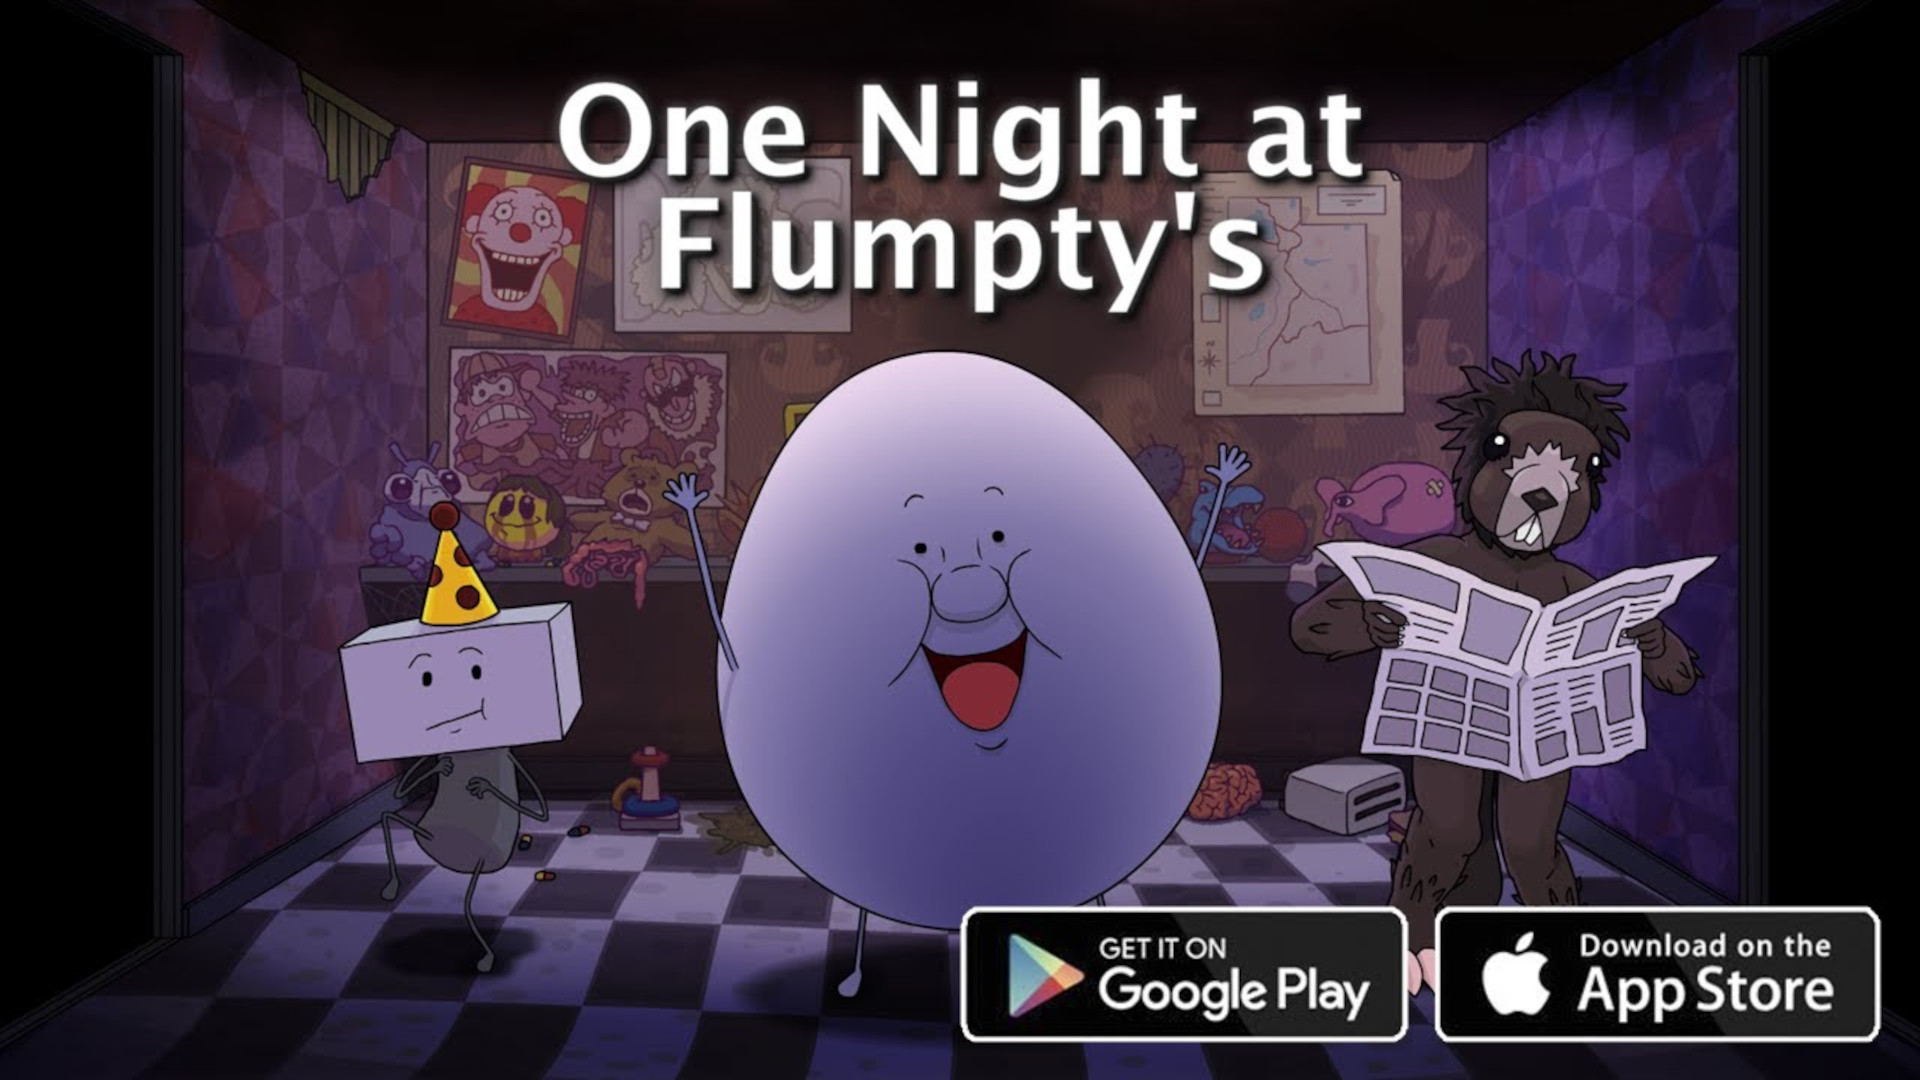 One Night at Flumpty's 3 Flumpty night walkthrough 